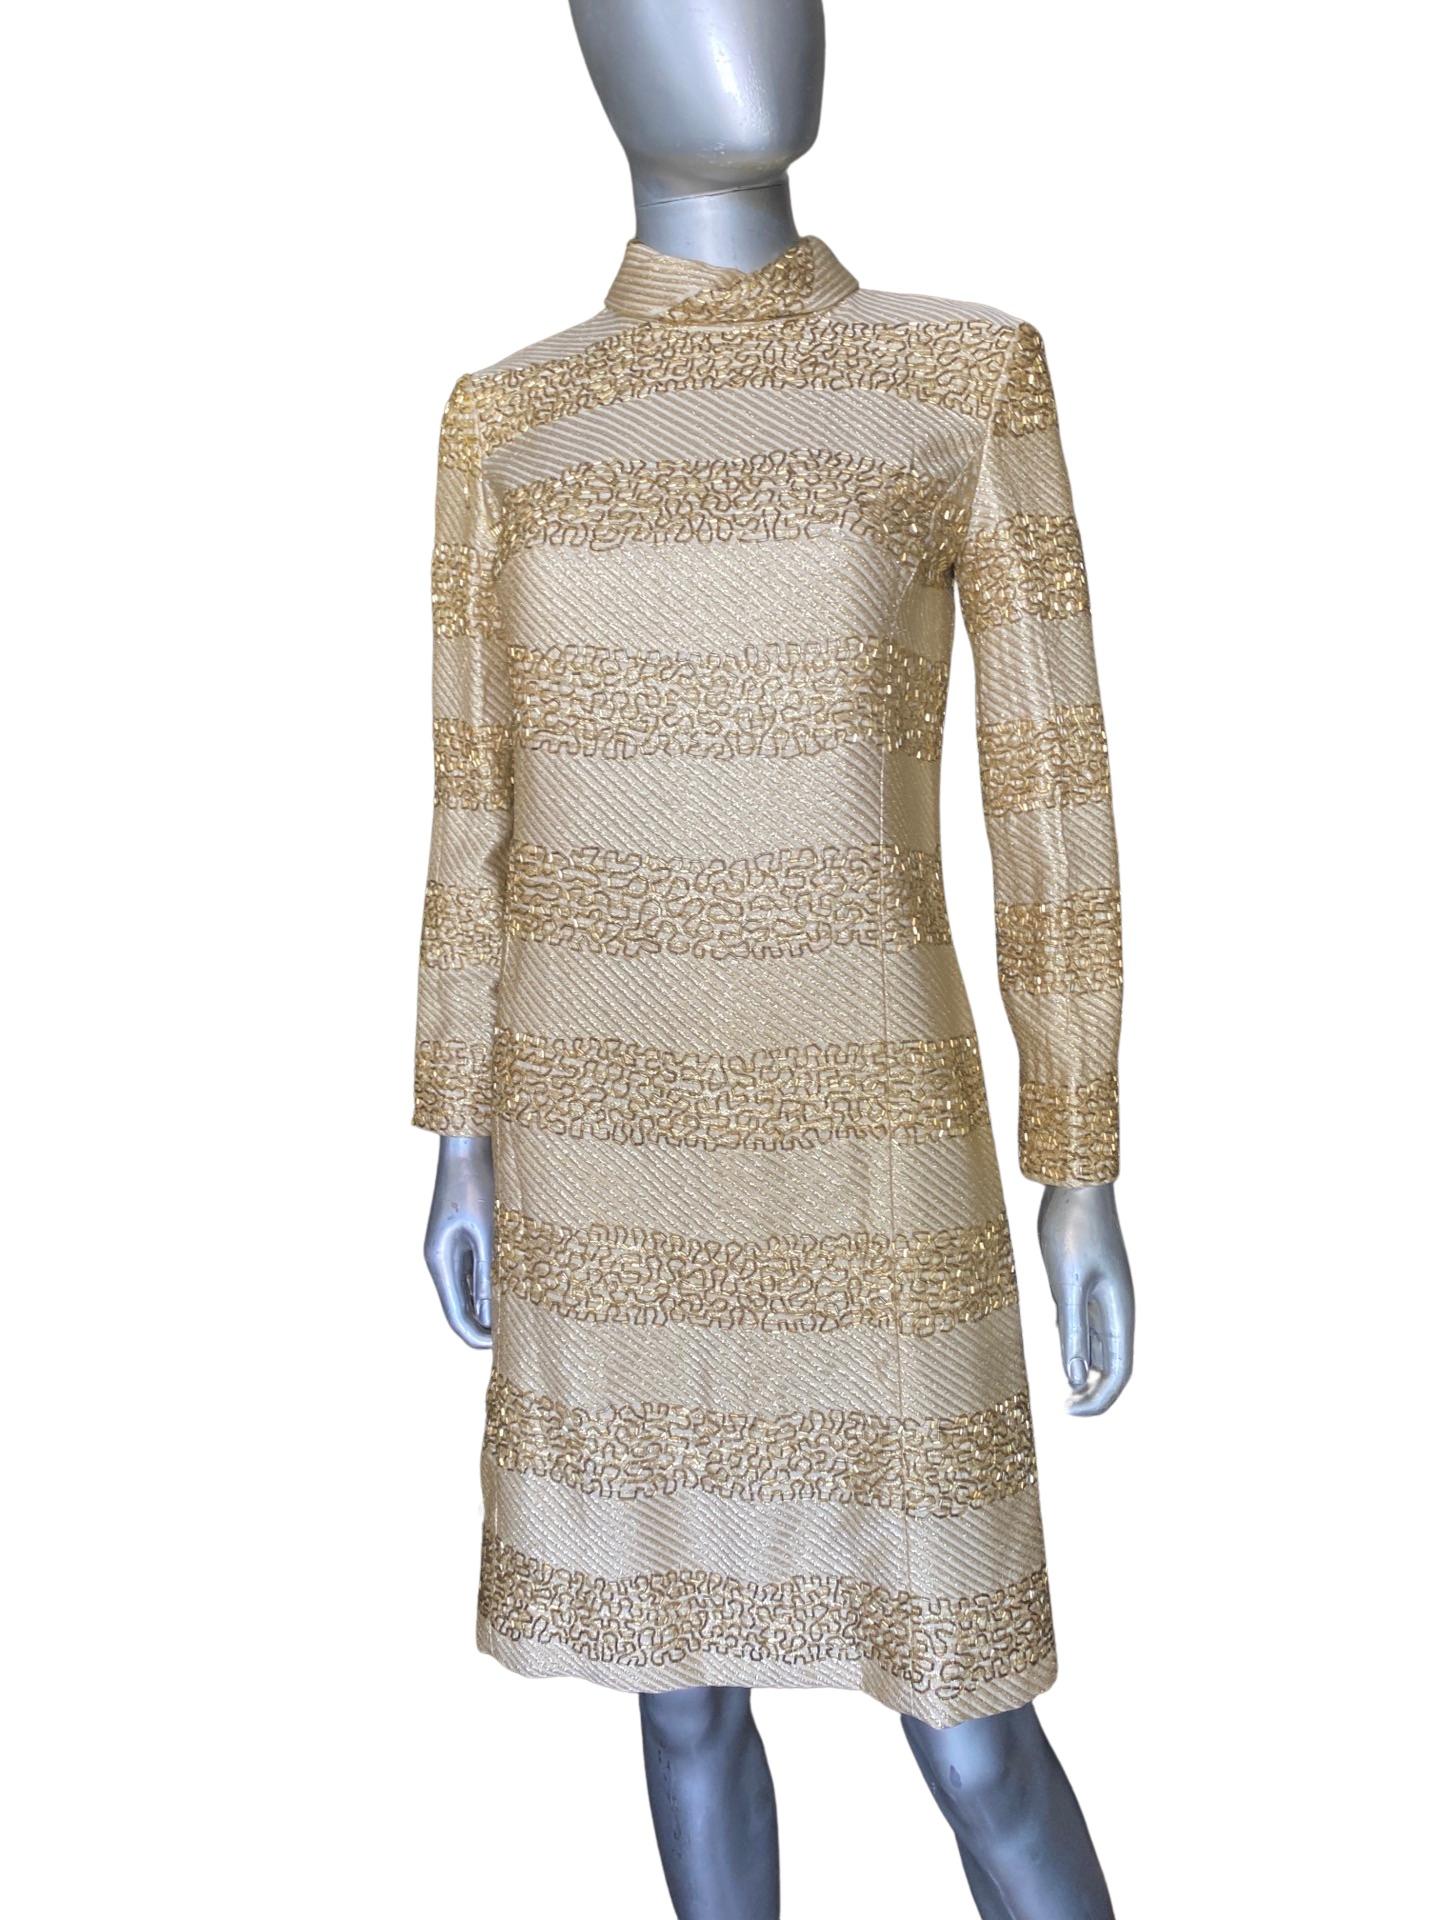 Women's Gold Beaded Vintage 1960s Chemise Dress for Saks Fifth Avenue